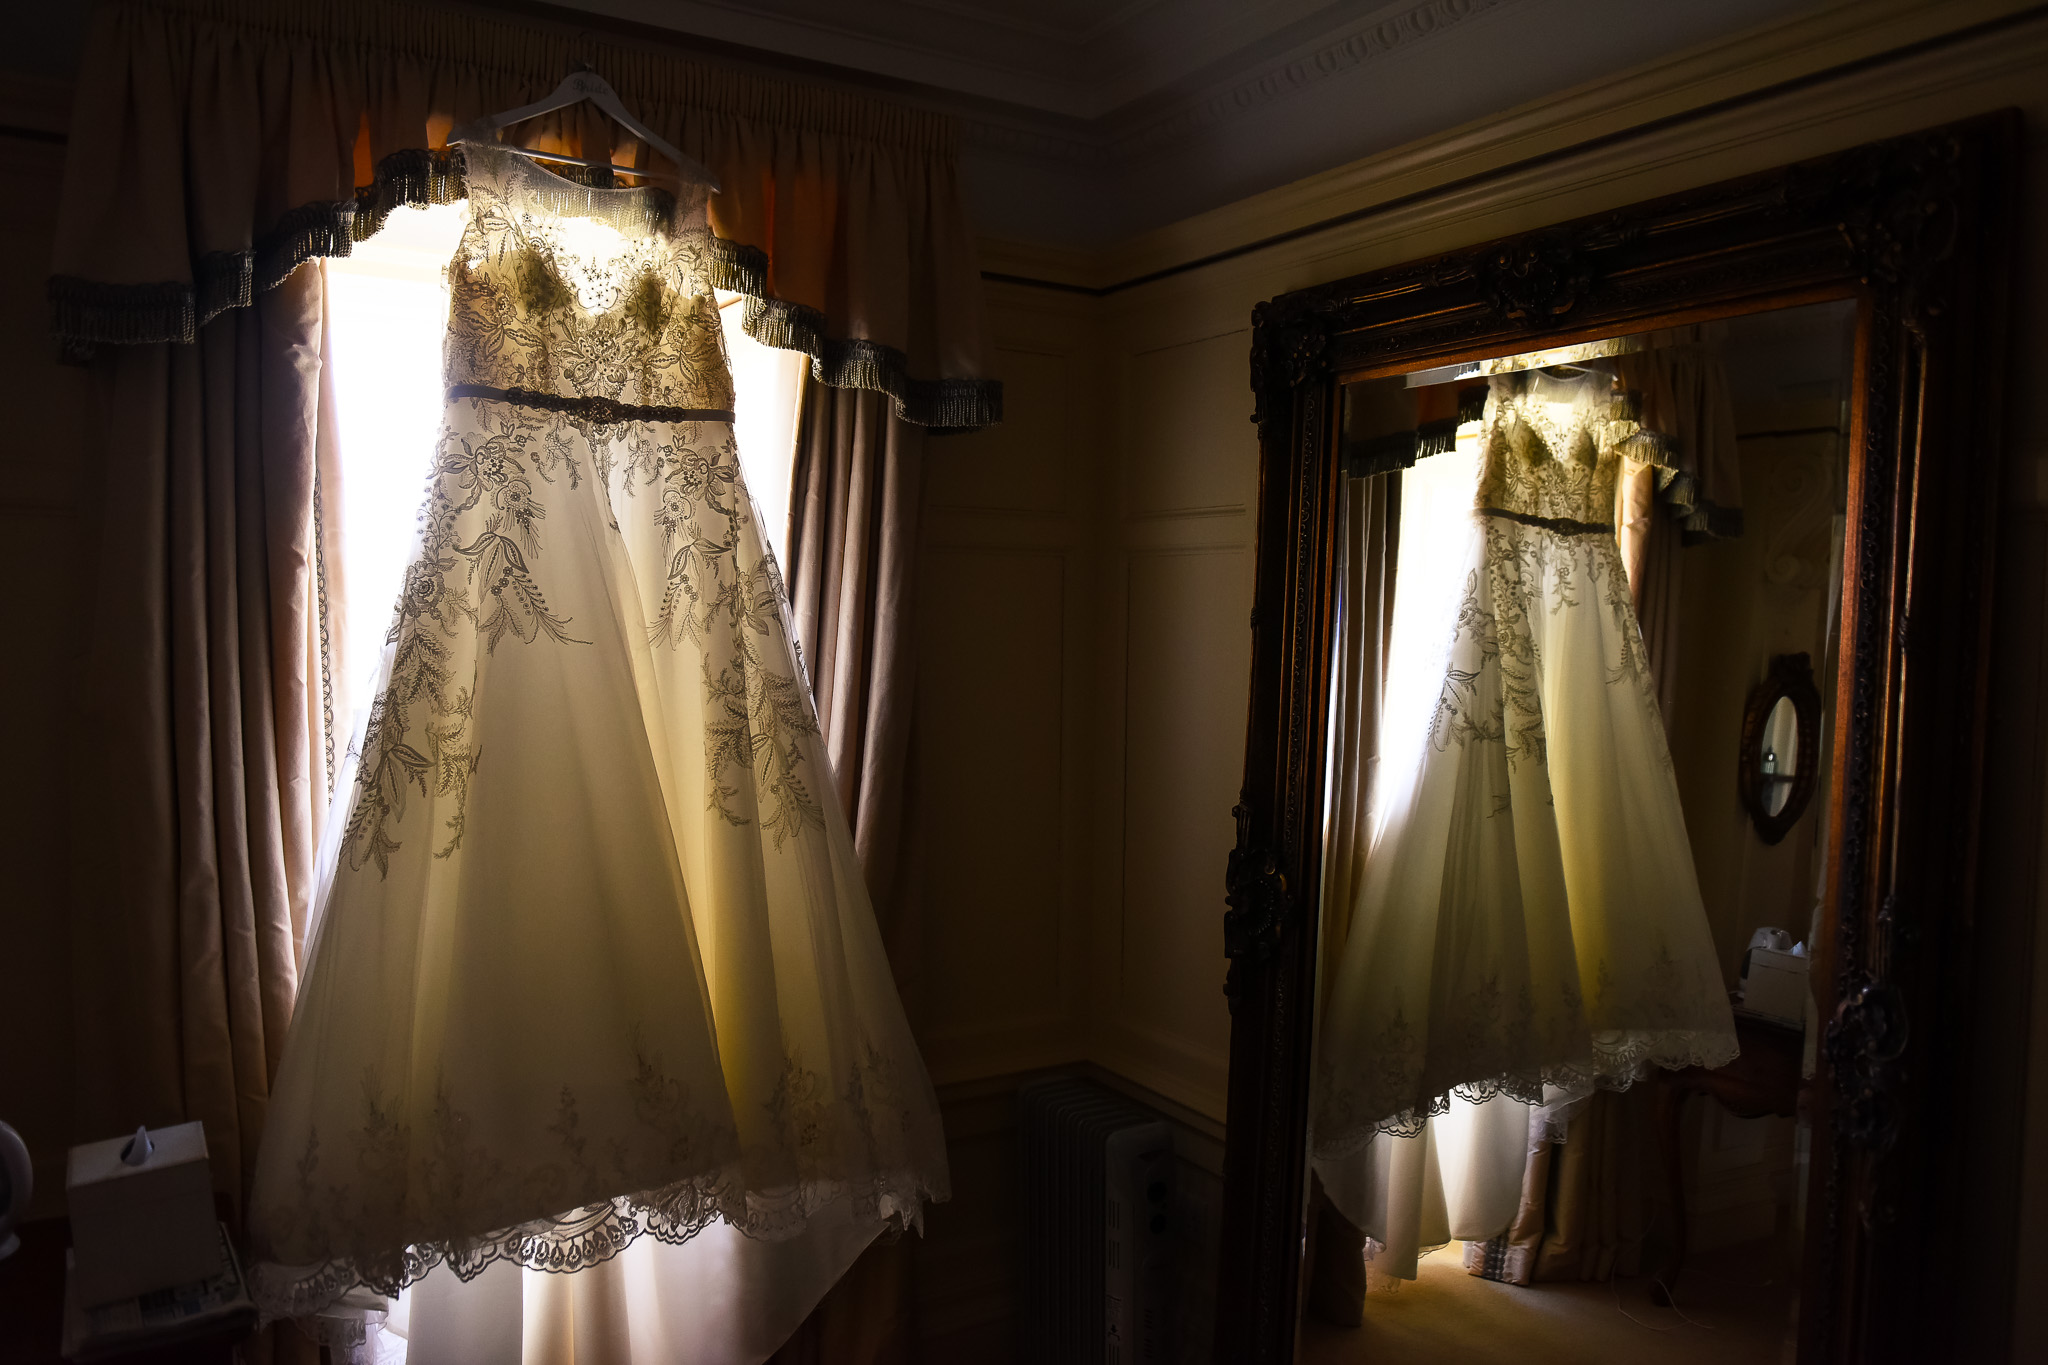 Reflection of wedding dress in mirror